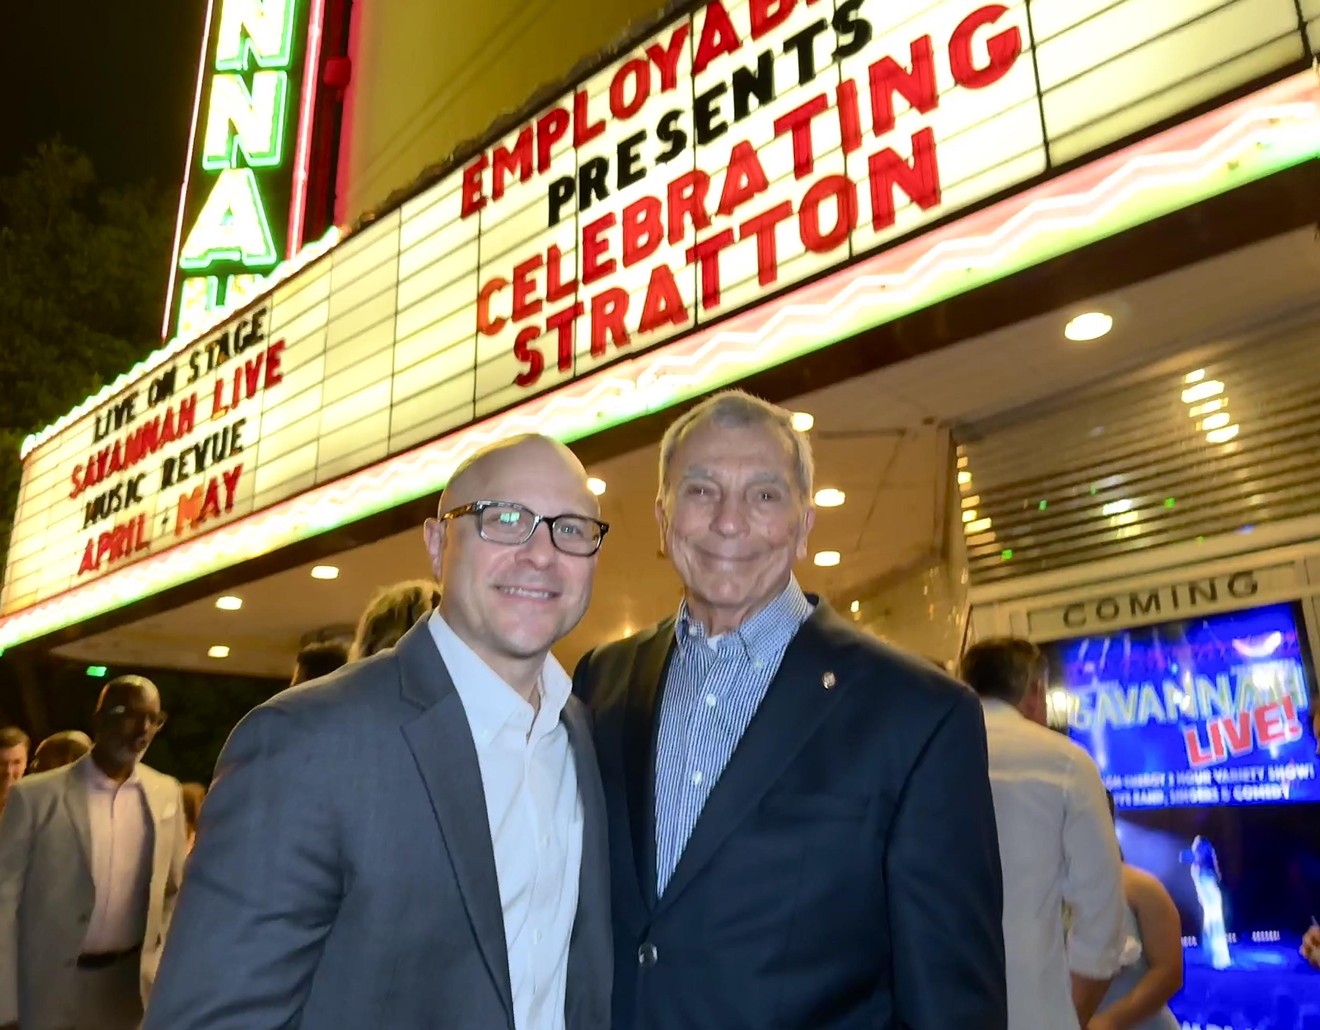 Employability Celebrates Stratton Leopold at Savannah Theater